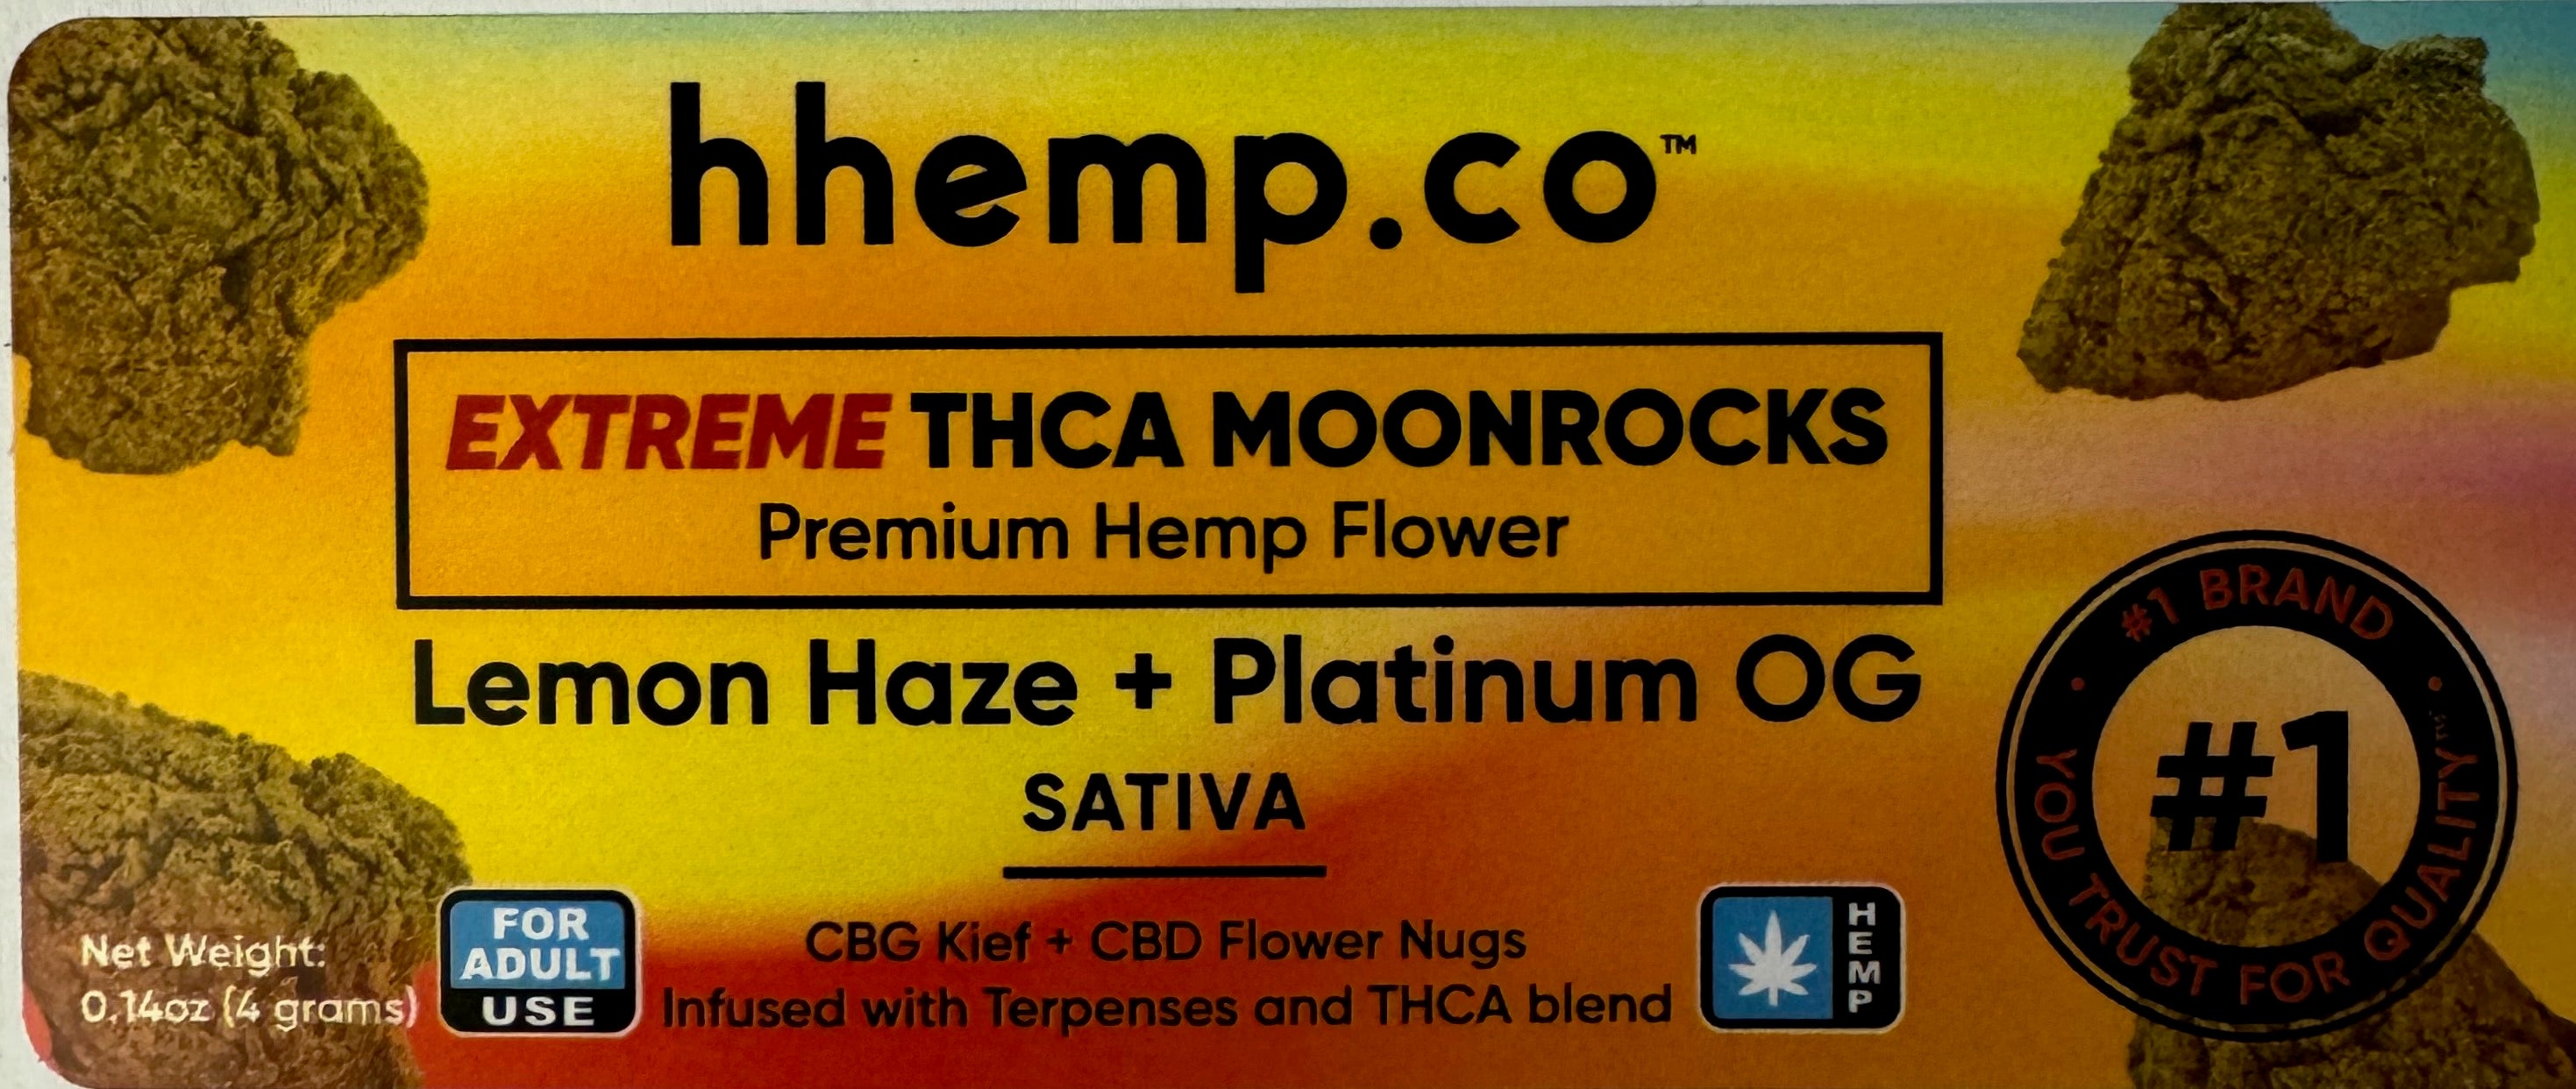 Extreme THCA Moonrocks Hemp Flower 4g - Unit